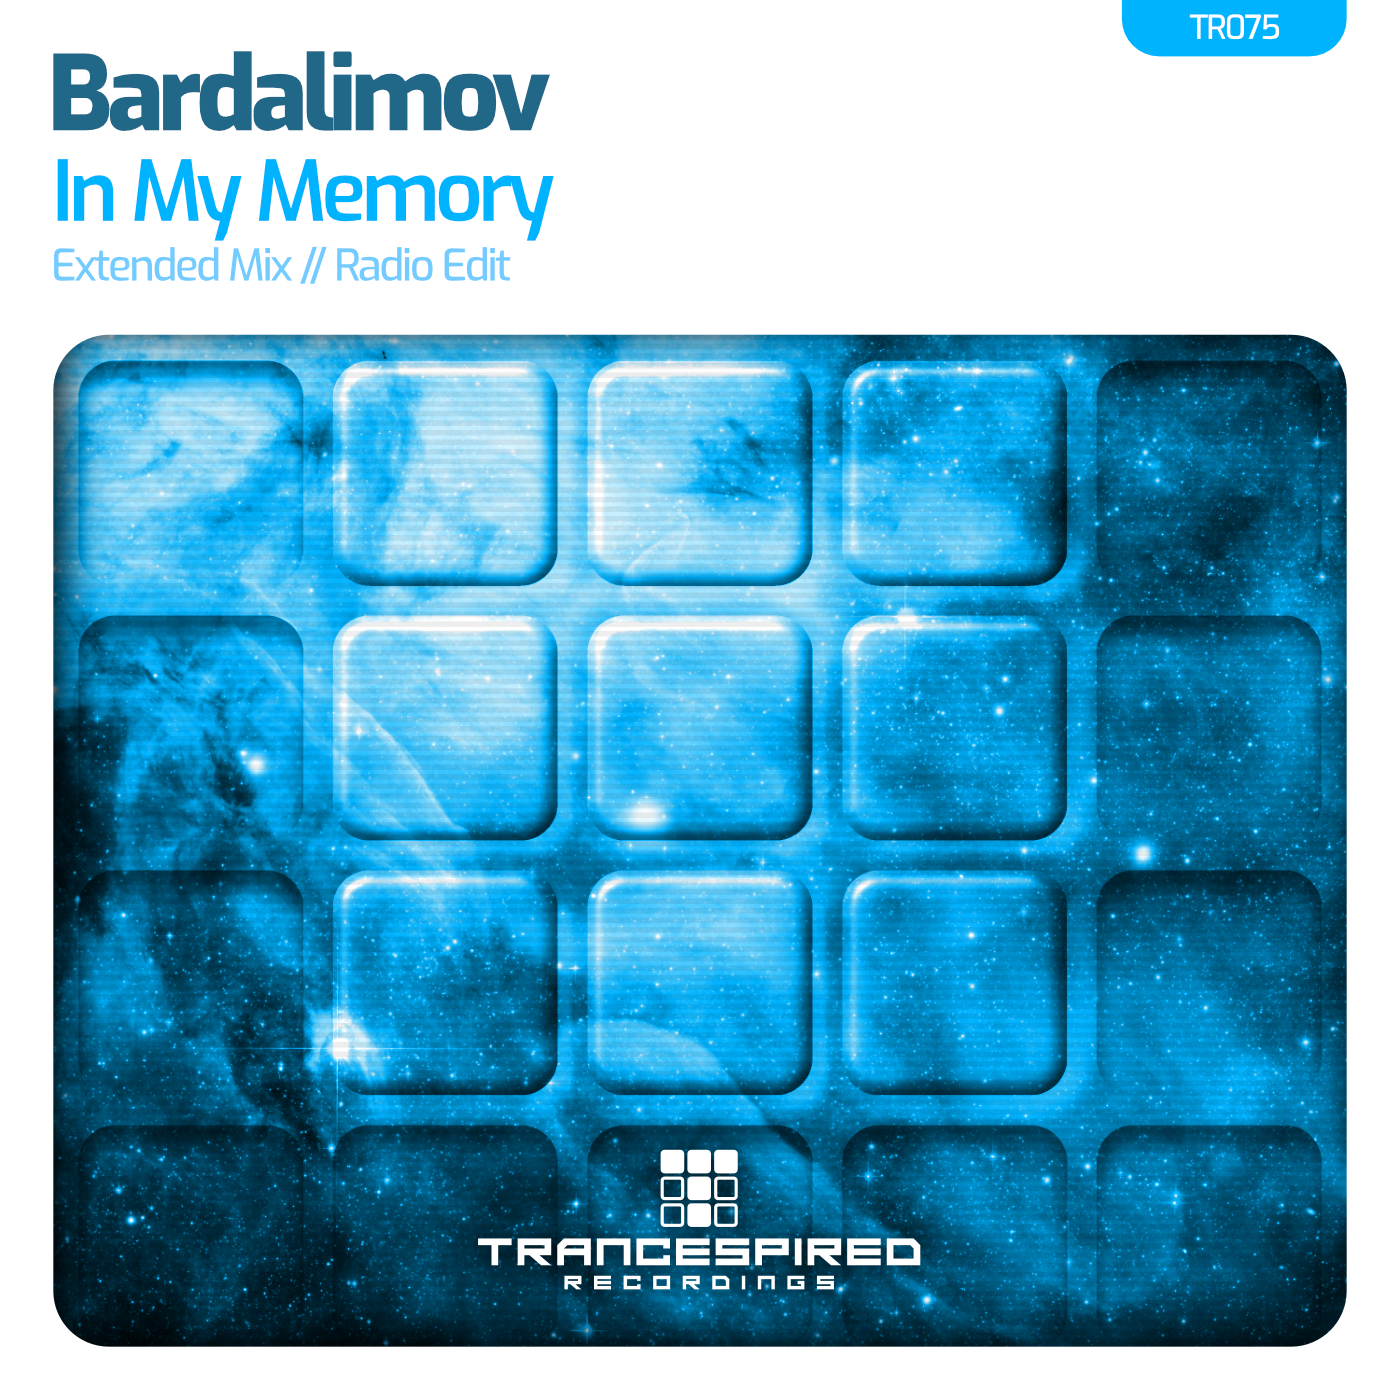 Bardalimov presents In My Memory on Trancespired Recordings